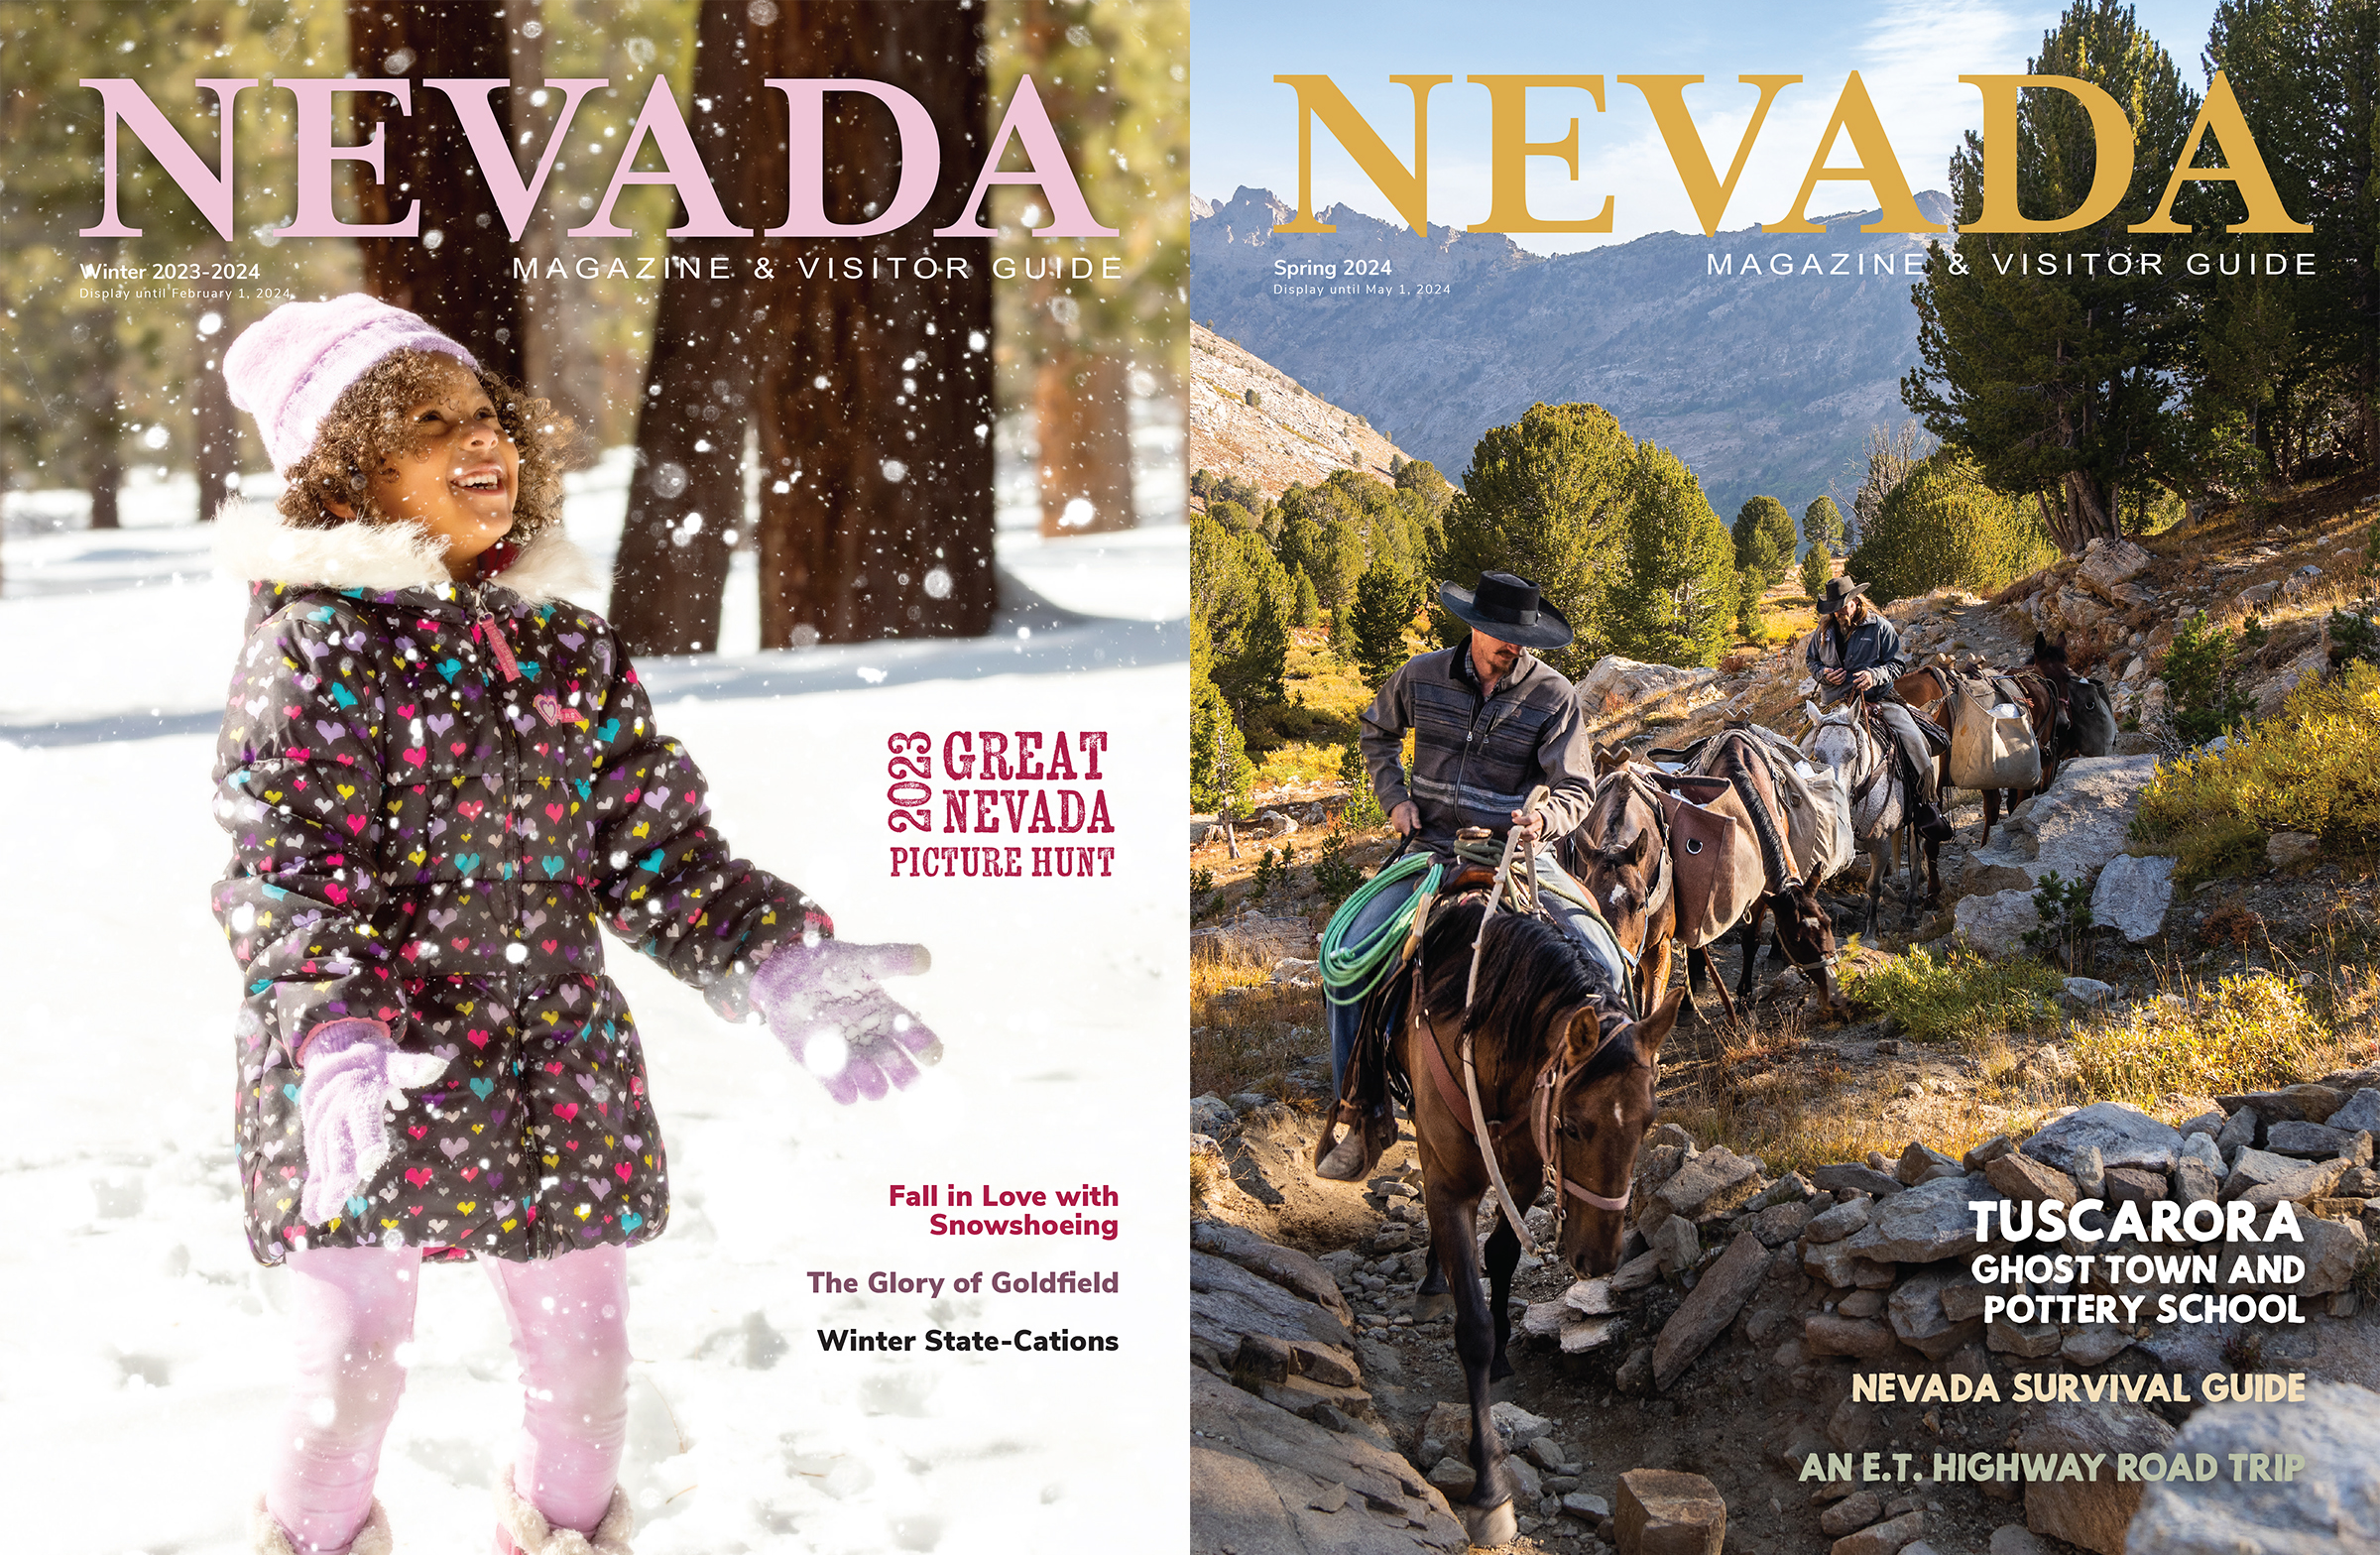 Nevada Magazine Issues